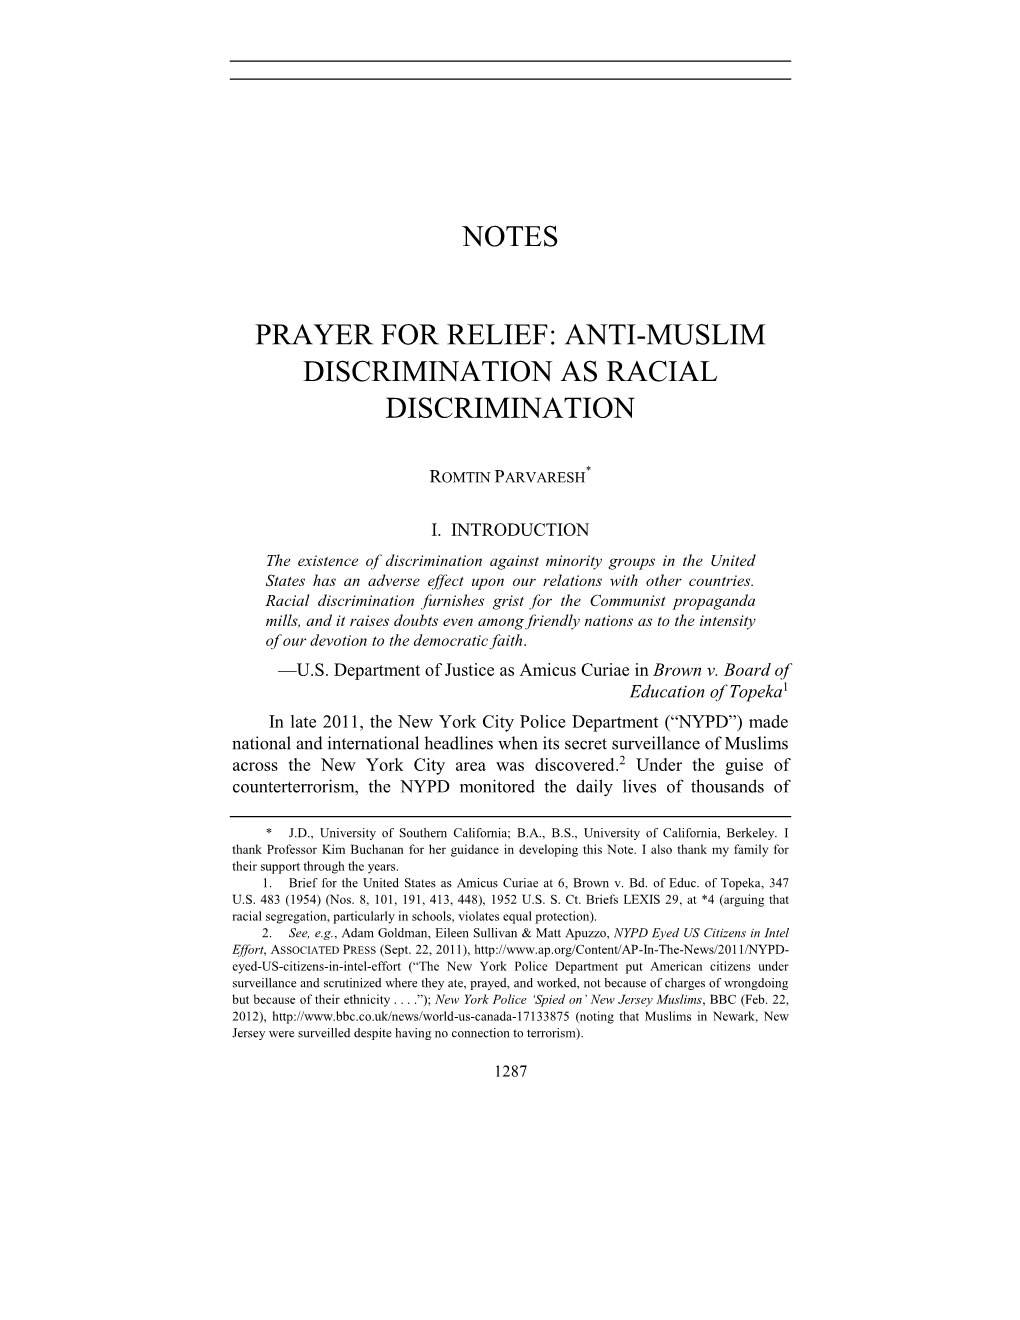 Notes Prayer for Relief: Anti-Muslim Discrimination As Racial Discrimination